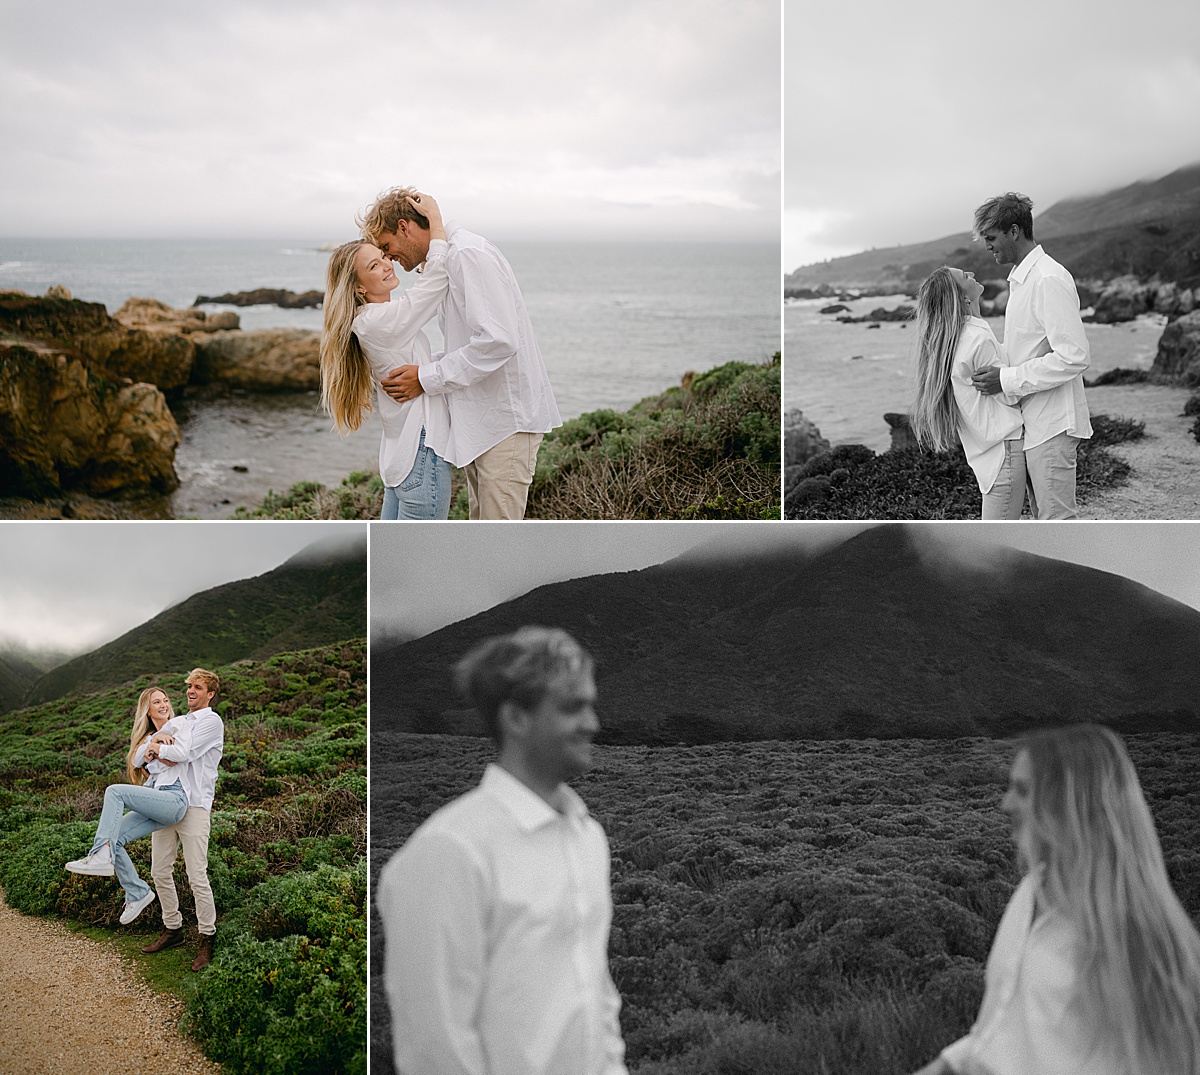 Romantic engagement photos set on a cliff in Big Sur, California. 